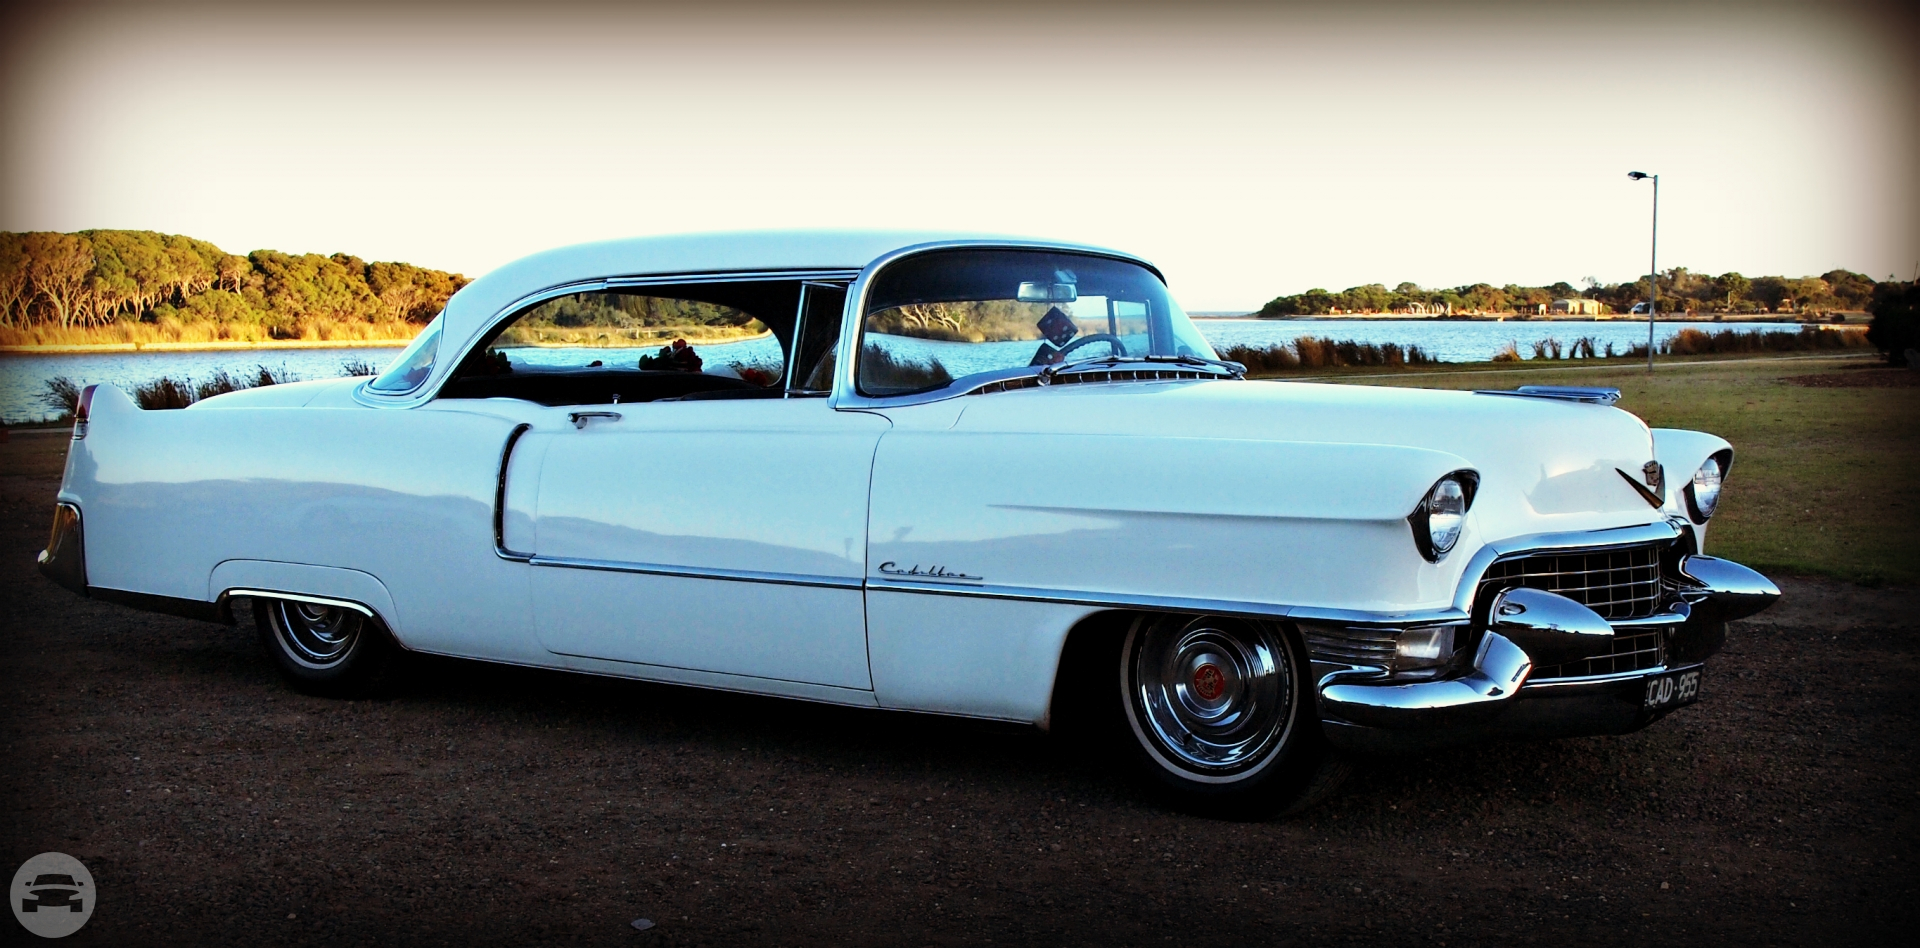 1955 Cadillac Coupe White
Sedan /
Altona VIC 3018, Australia

 / Hourly AUD$ 0.00
